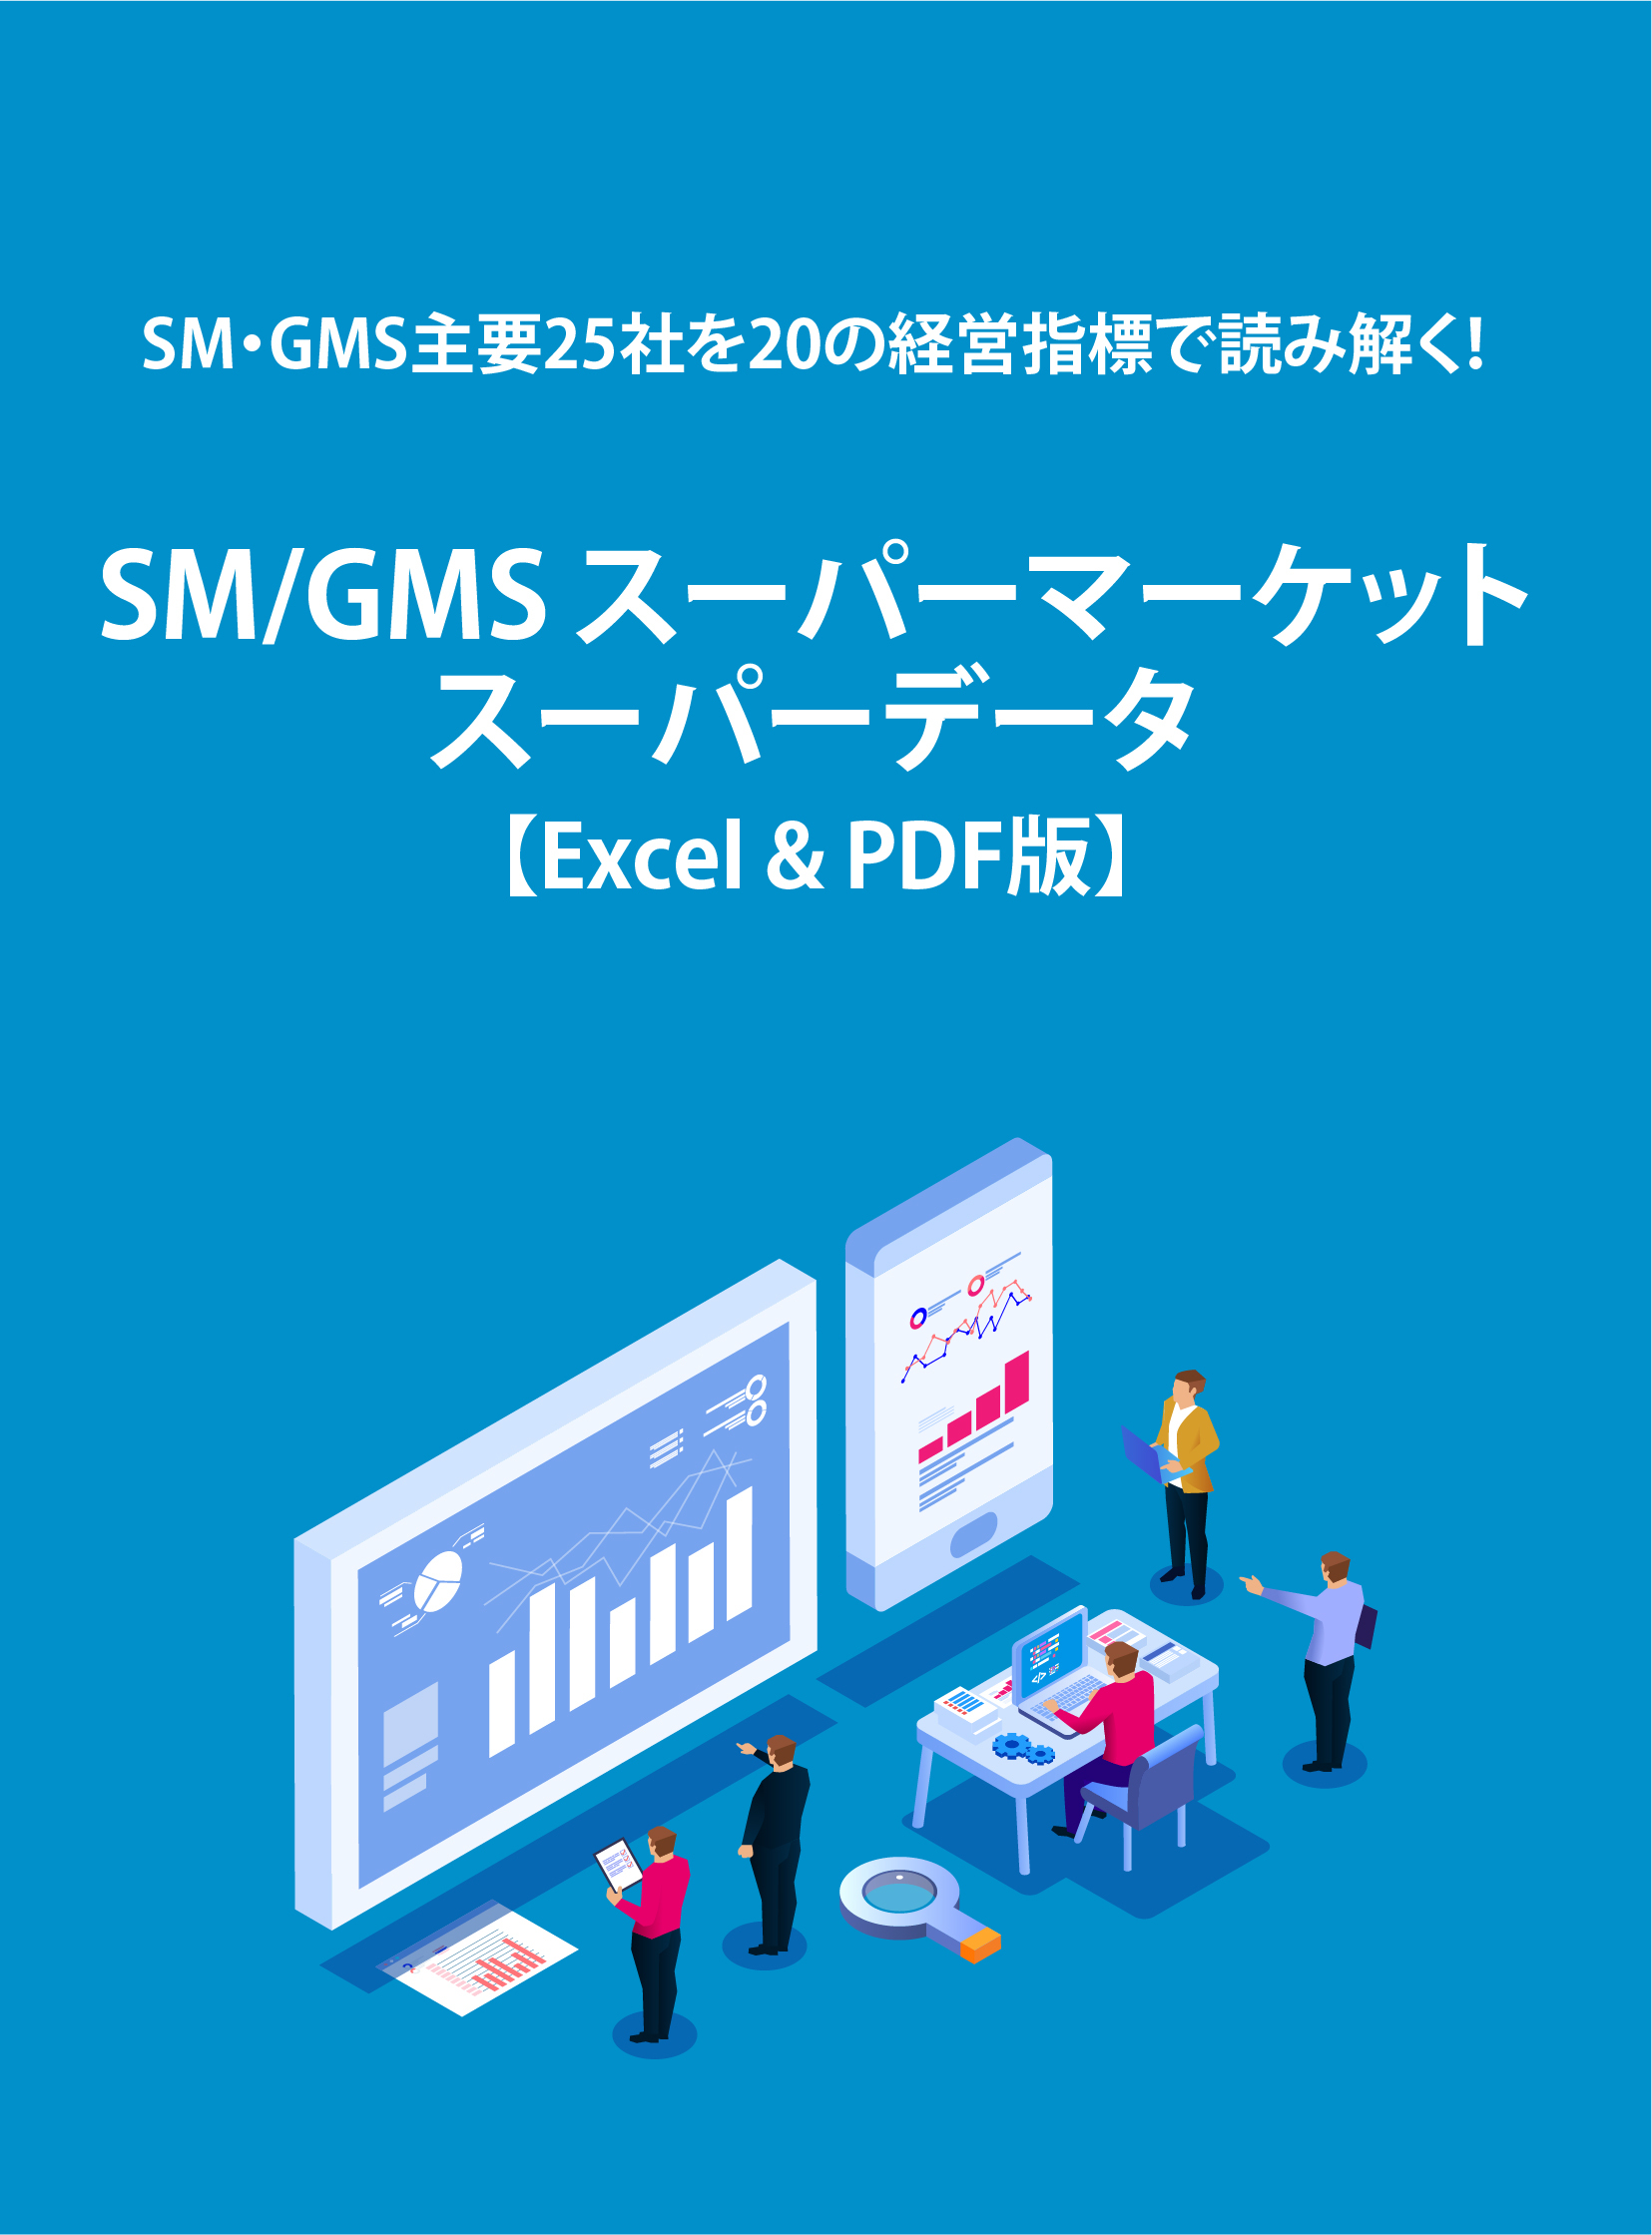 SM/GMS スーパーマーケットスーパーデータ 【Excel & PDF】